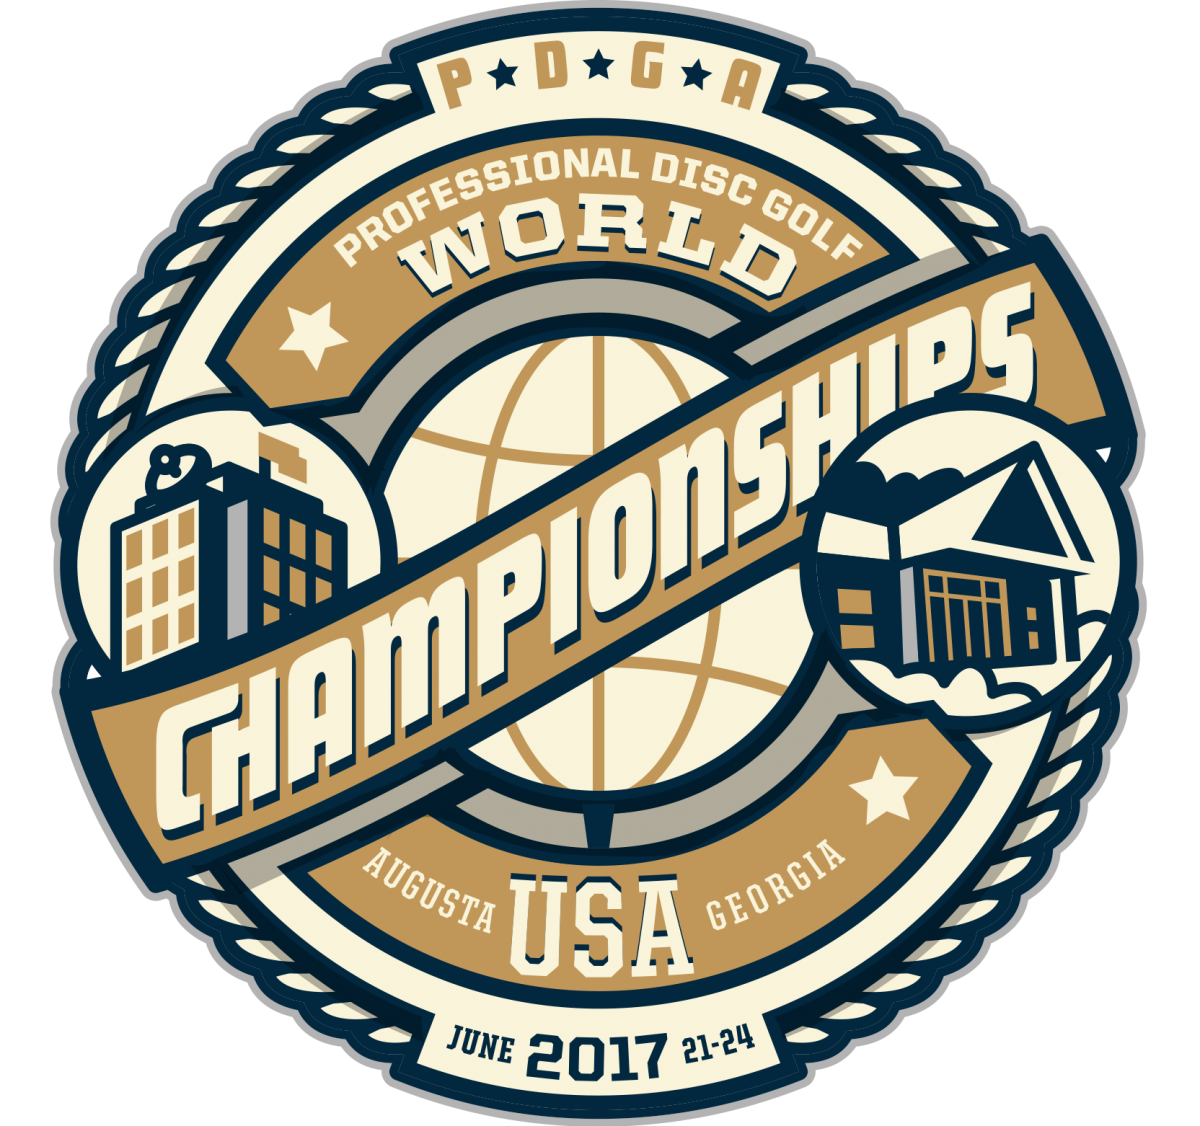 2017-pro-worlds-logo.jpg